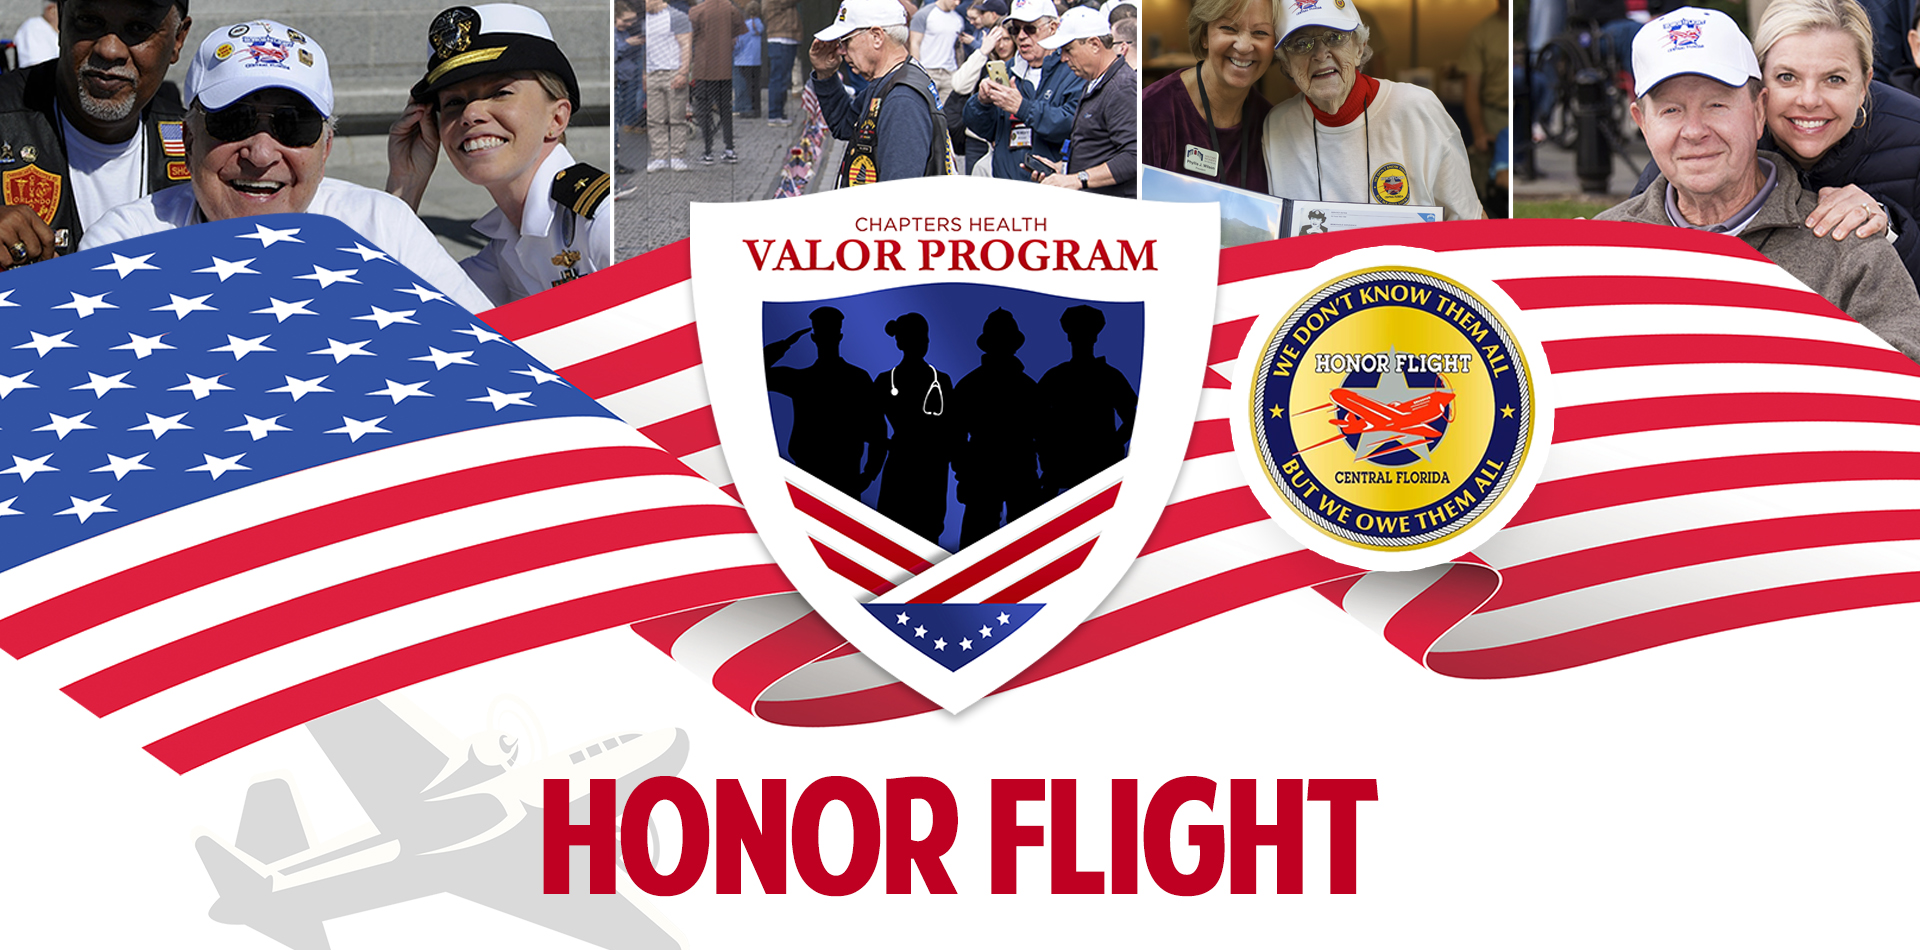 Chapters Health Valor Program Honor Flight